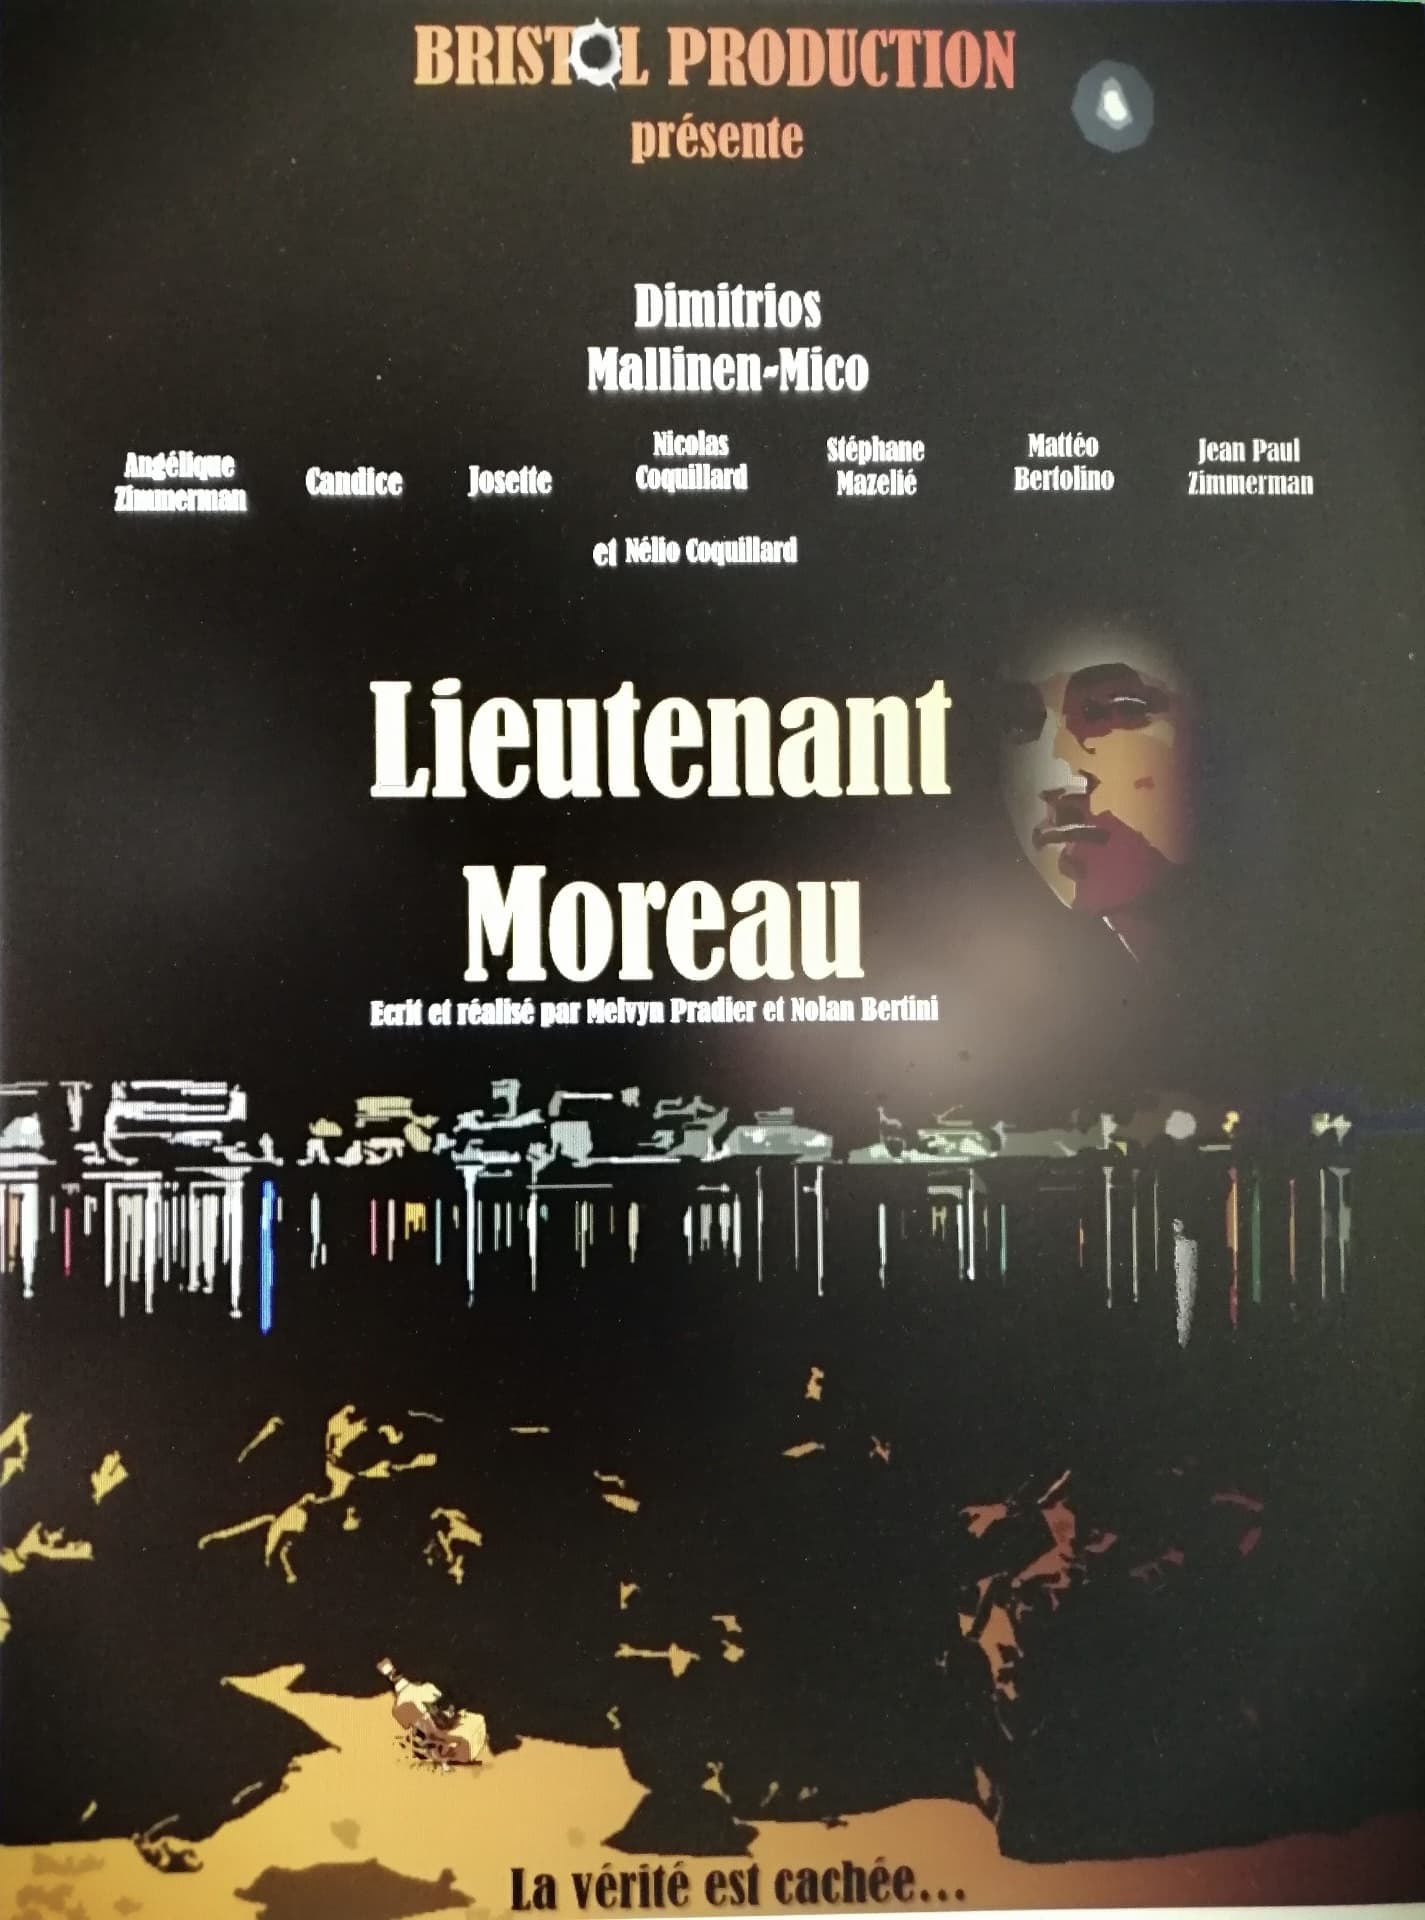 Lieutenant Moreau